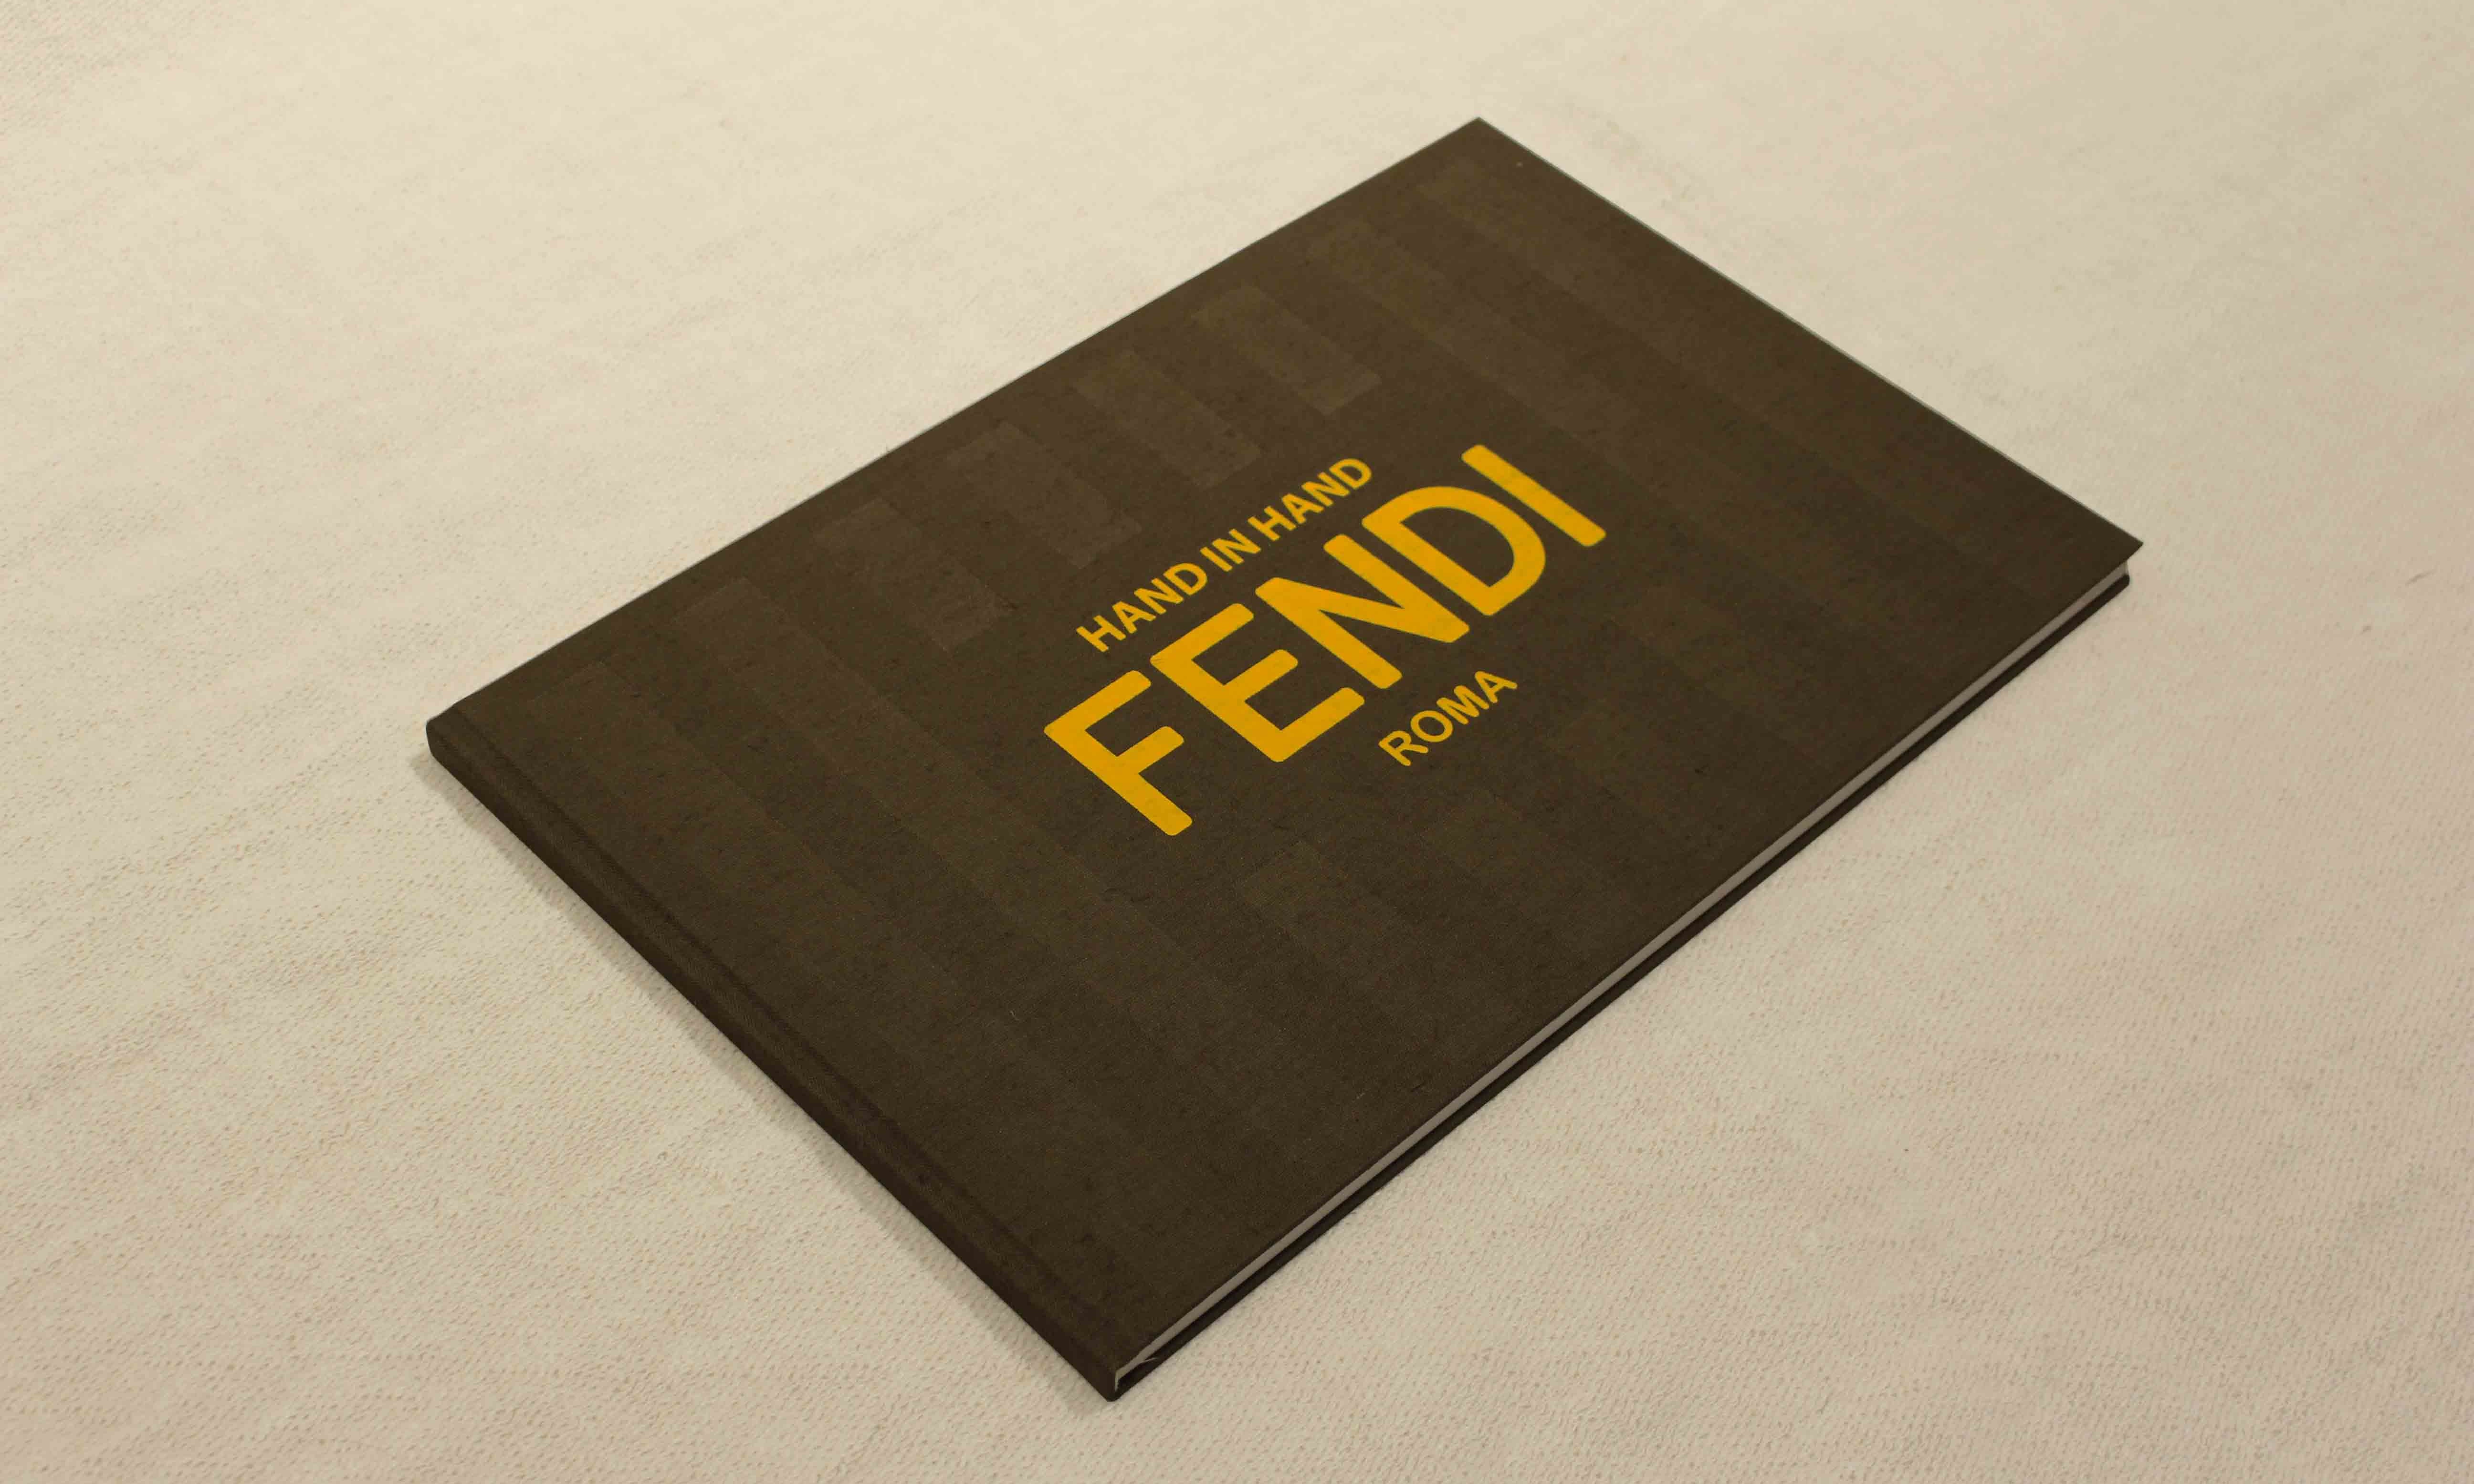 FENDI、プロジェクト「ハンド・イン・ハンド」記念書籍発売 「バケット」のアート作品を多数収録